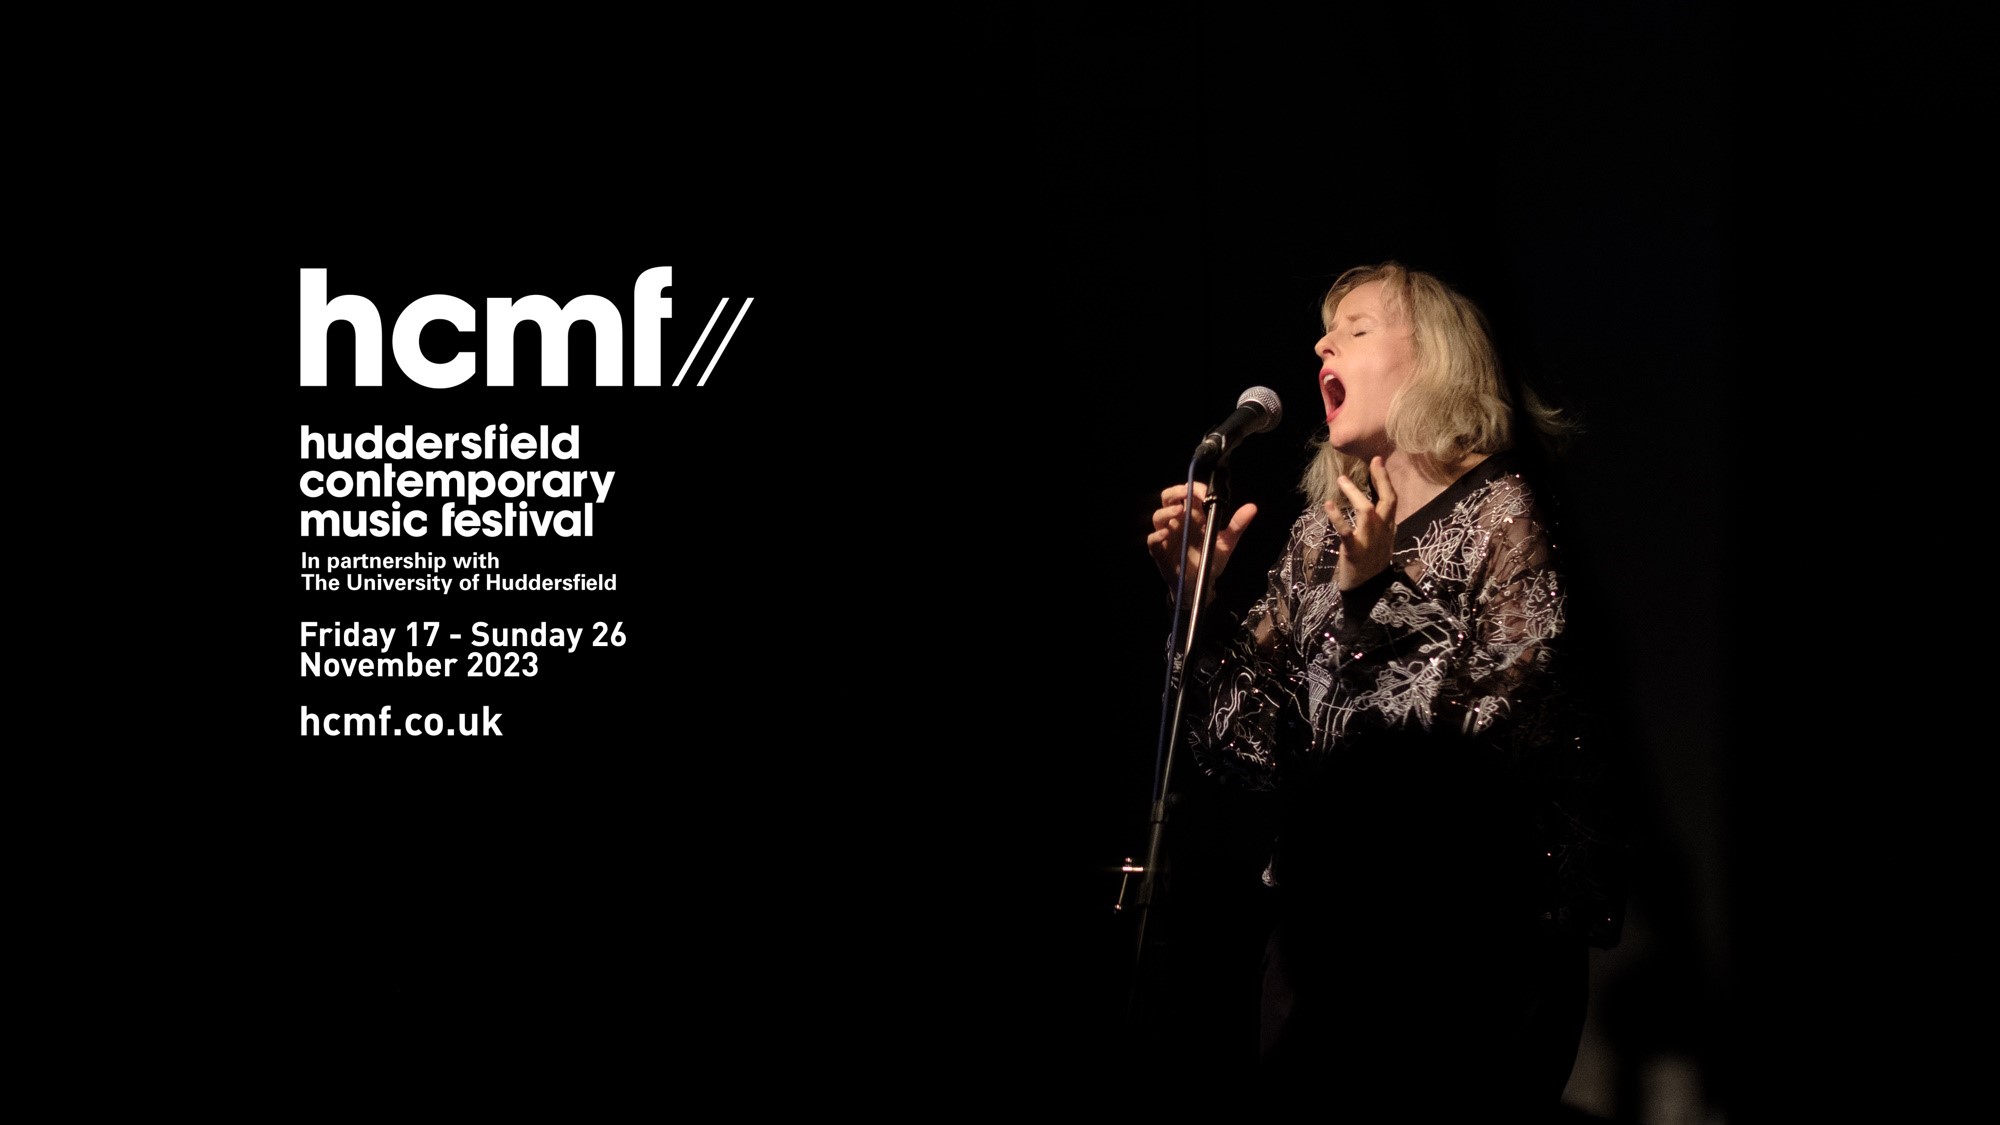 Huddersfield Contemporary Music Festival (hcmf)